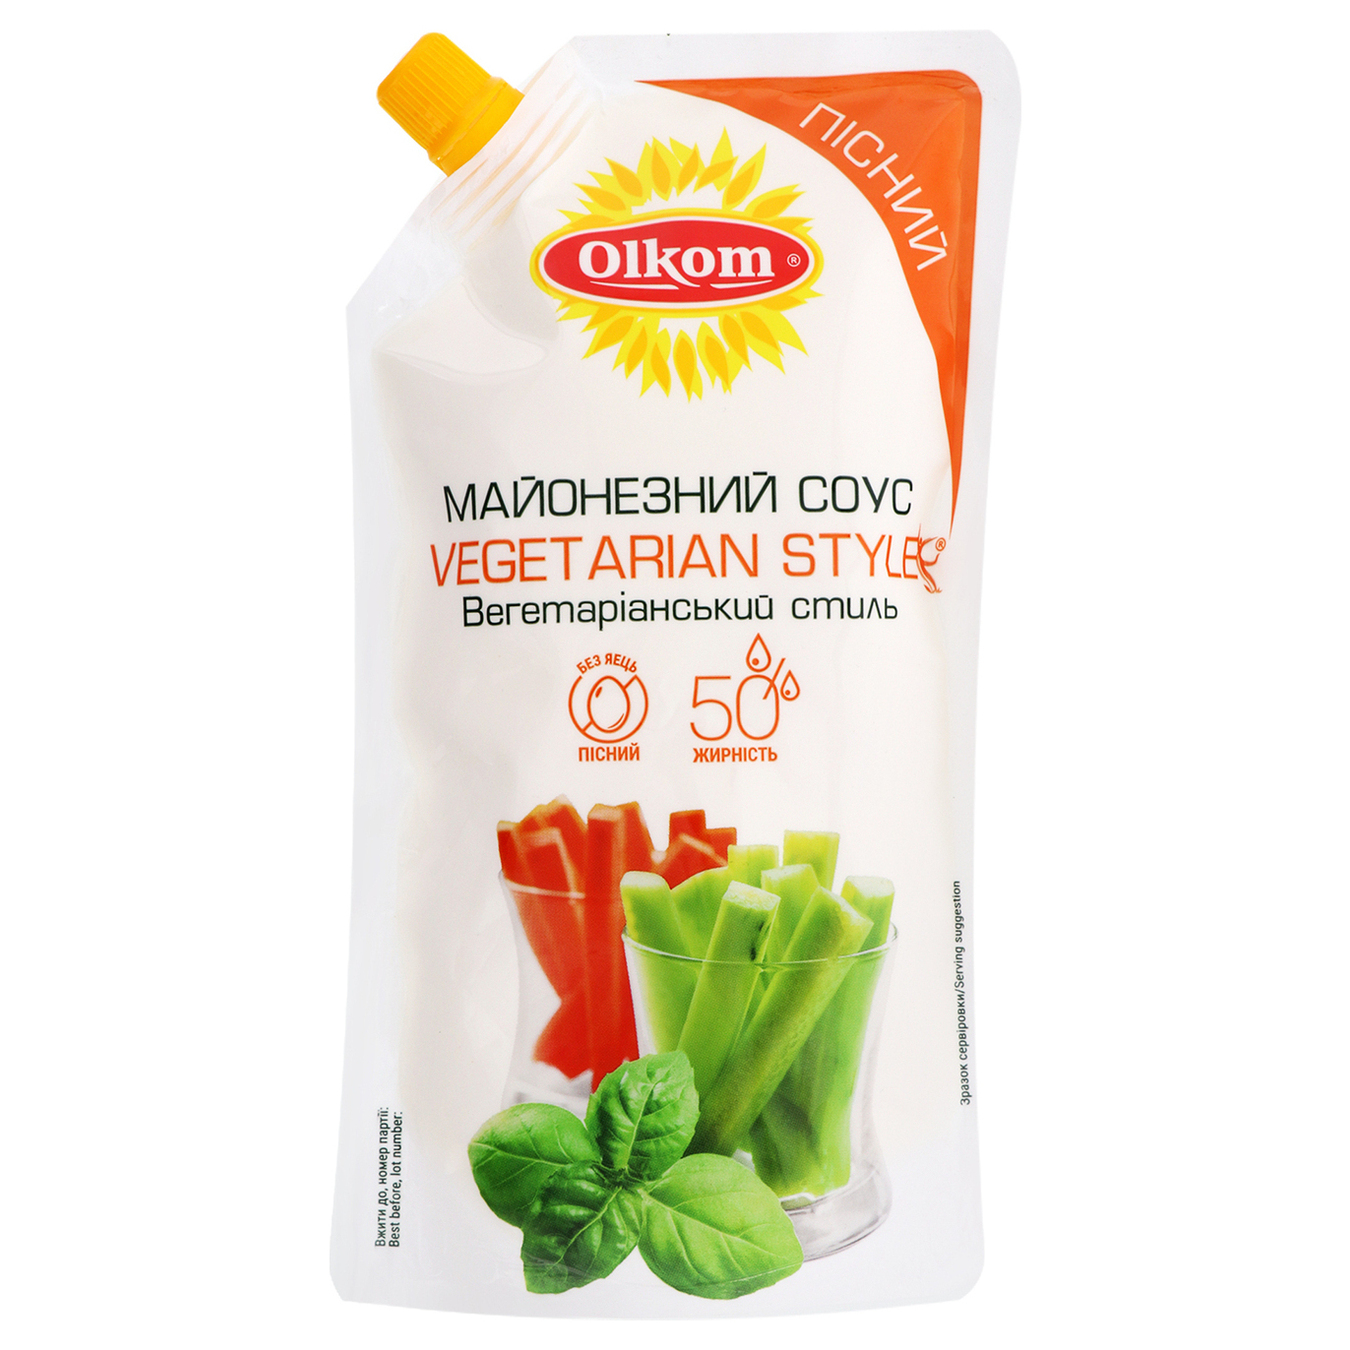 Olkom Mayonnaise sauce Vegetarian style 50% 295g